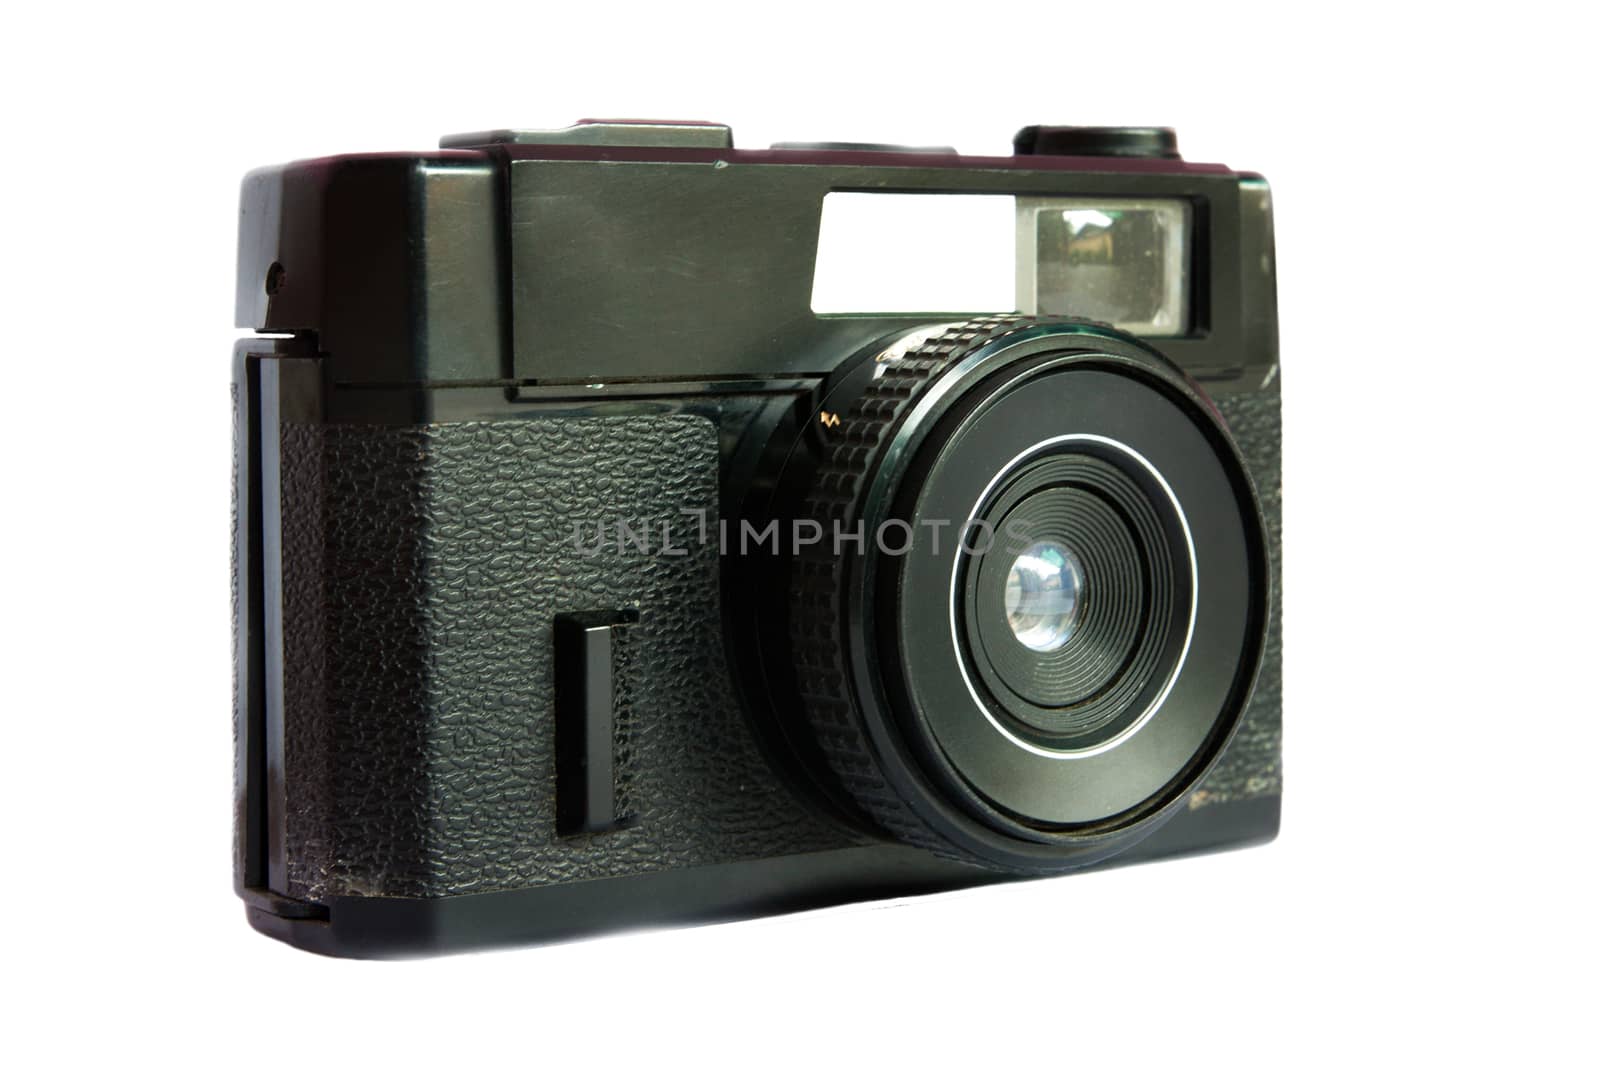 An elegant retro range finder camera by jimbophoto